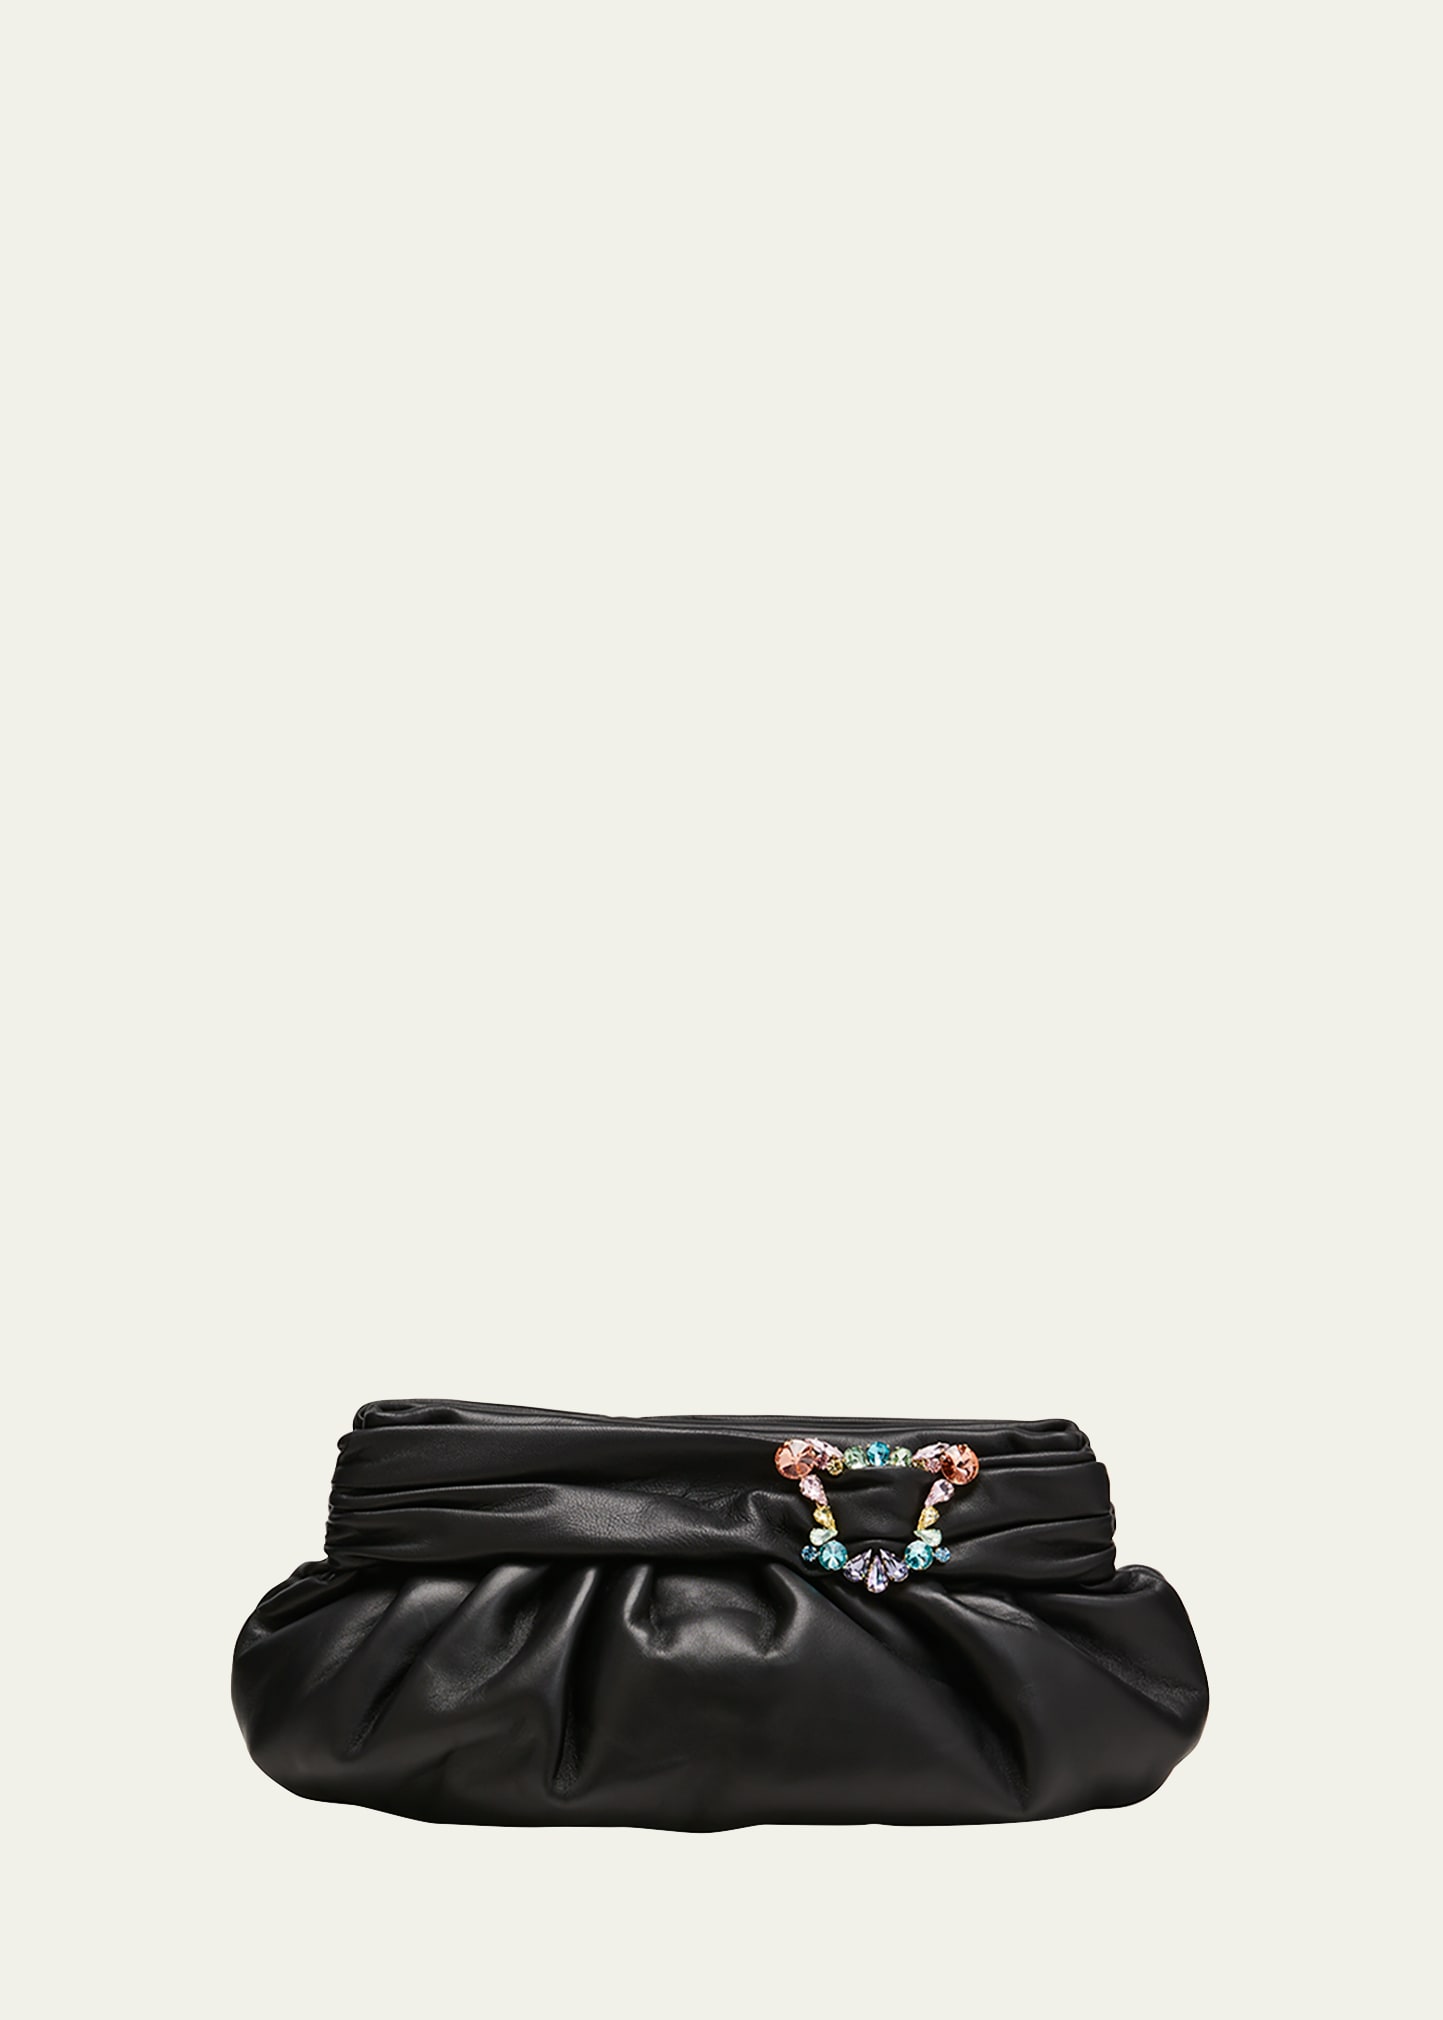 Sophia Webster Margaux Crystal Ruche Leather Clutch Bag In Black Multi